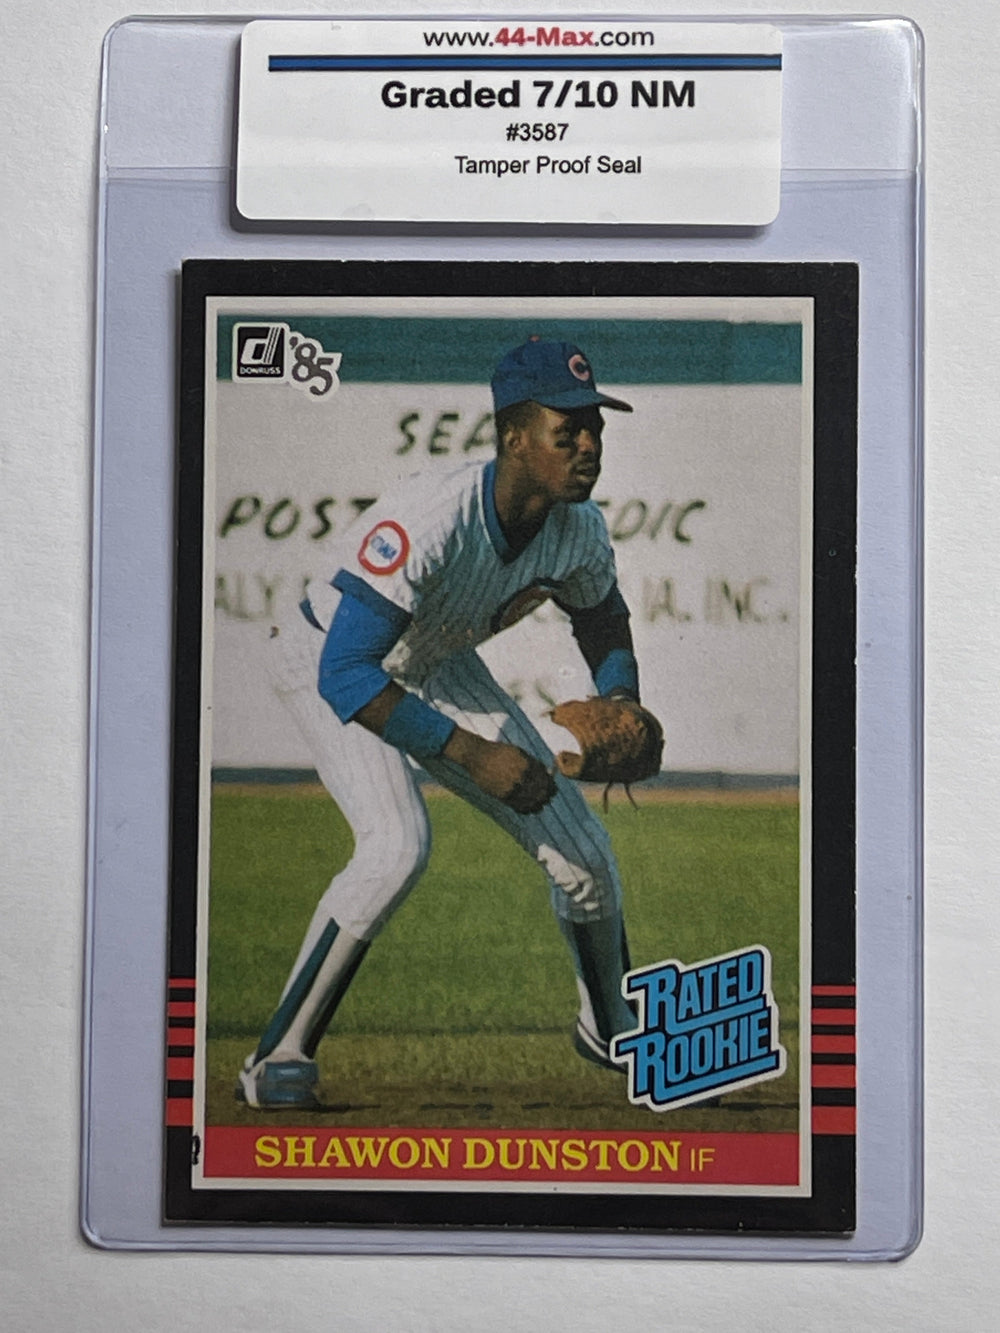 Shawon Dunston 1985 Donruss RC Baseball Card. 44-Max 7/10 NM #3587